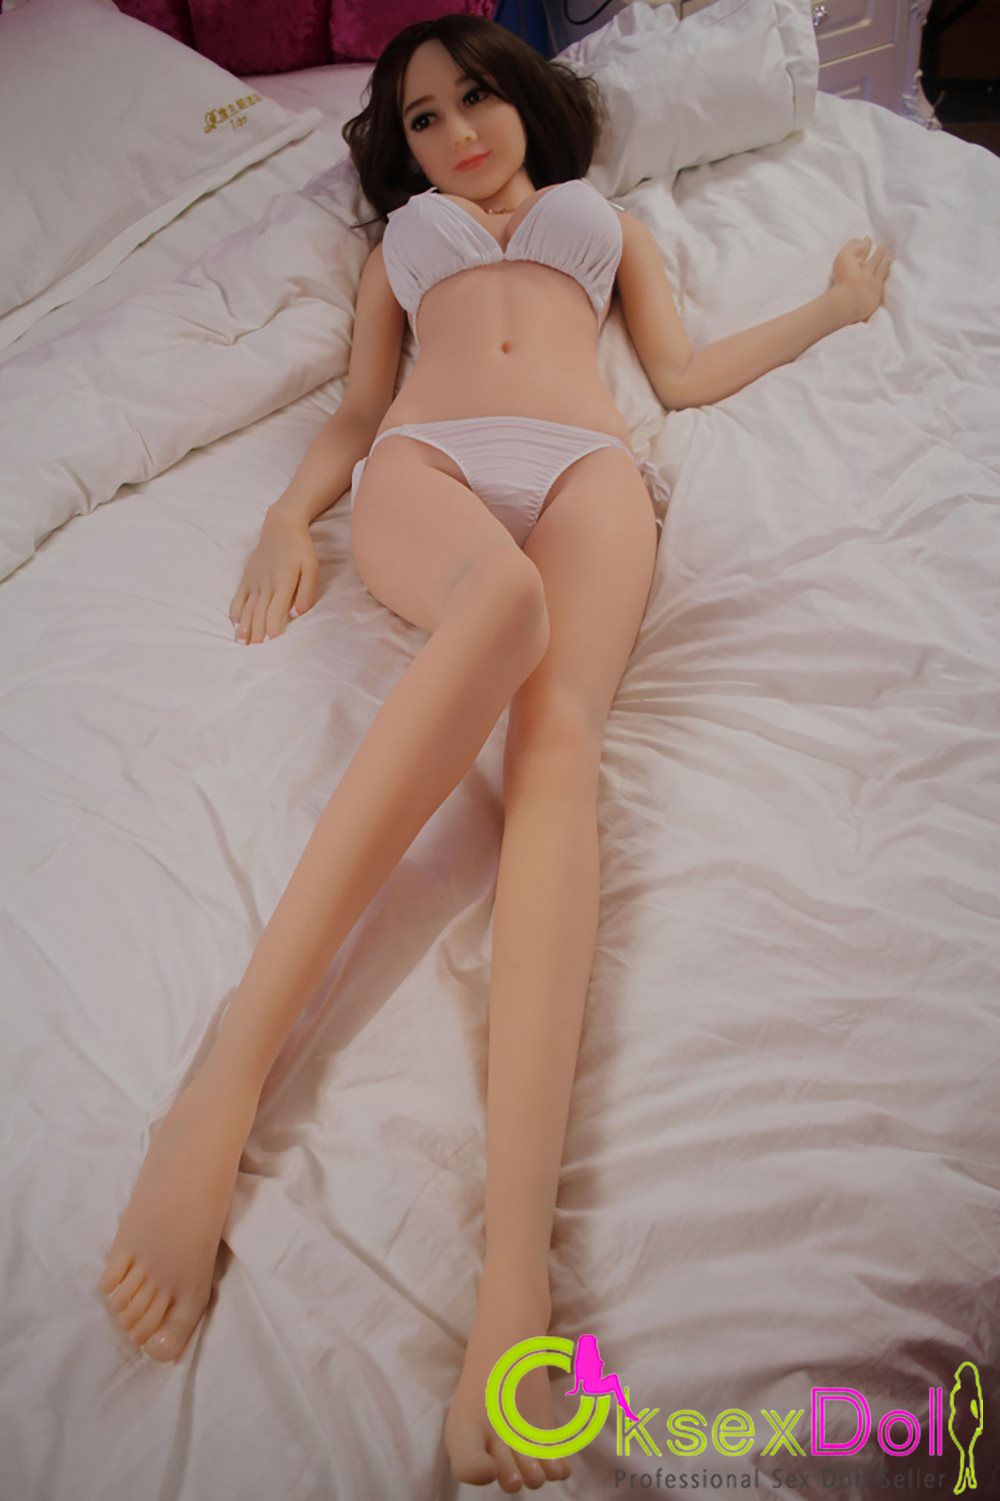 Medium Tits Sex dolls images